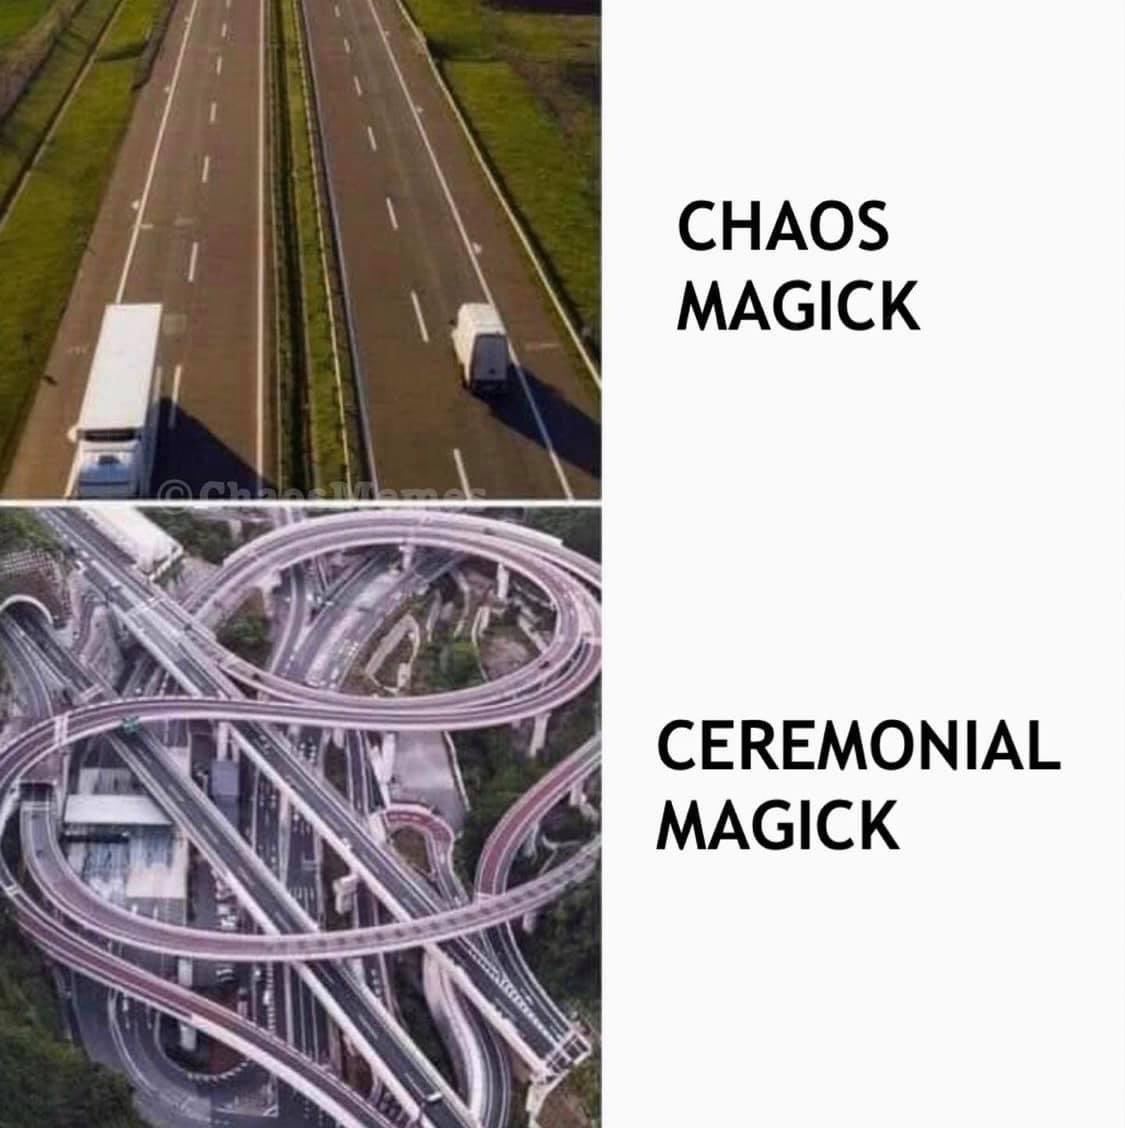 #ceremonialmagick #magick #occult #esoteric #meme #chaosmagick